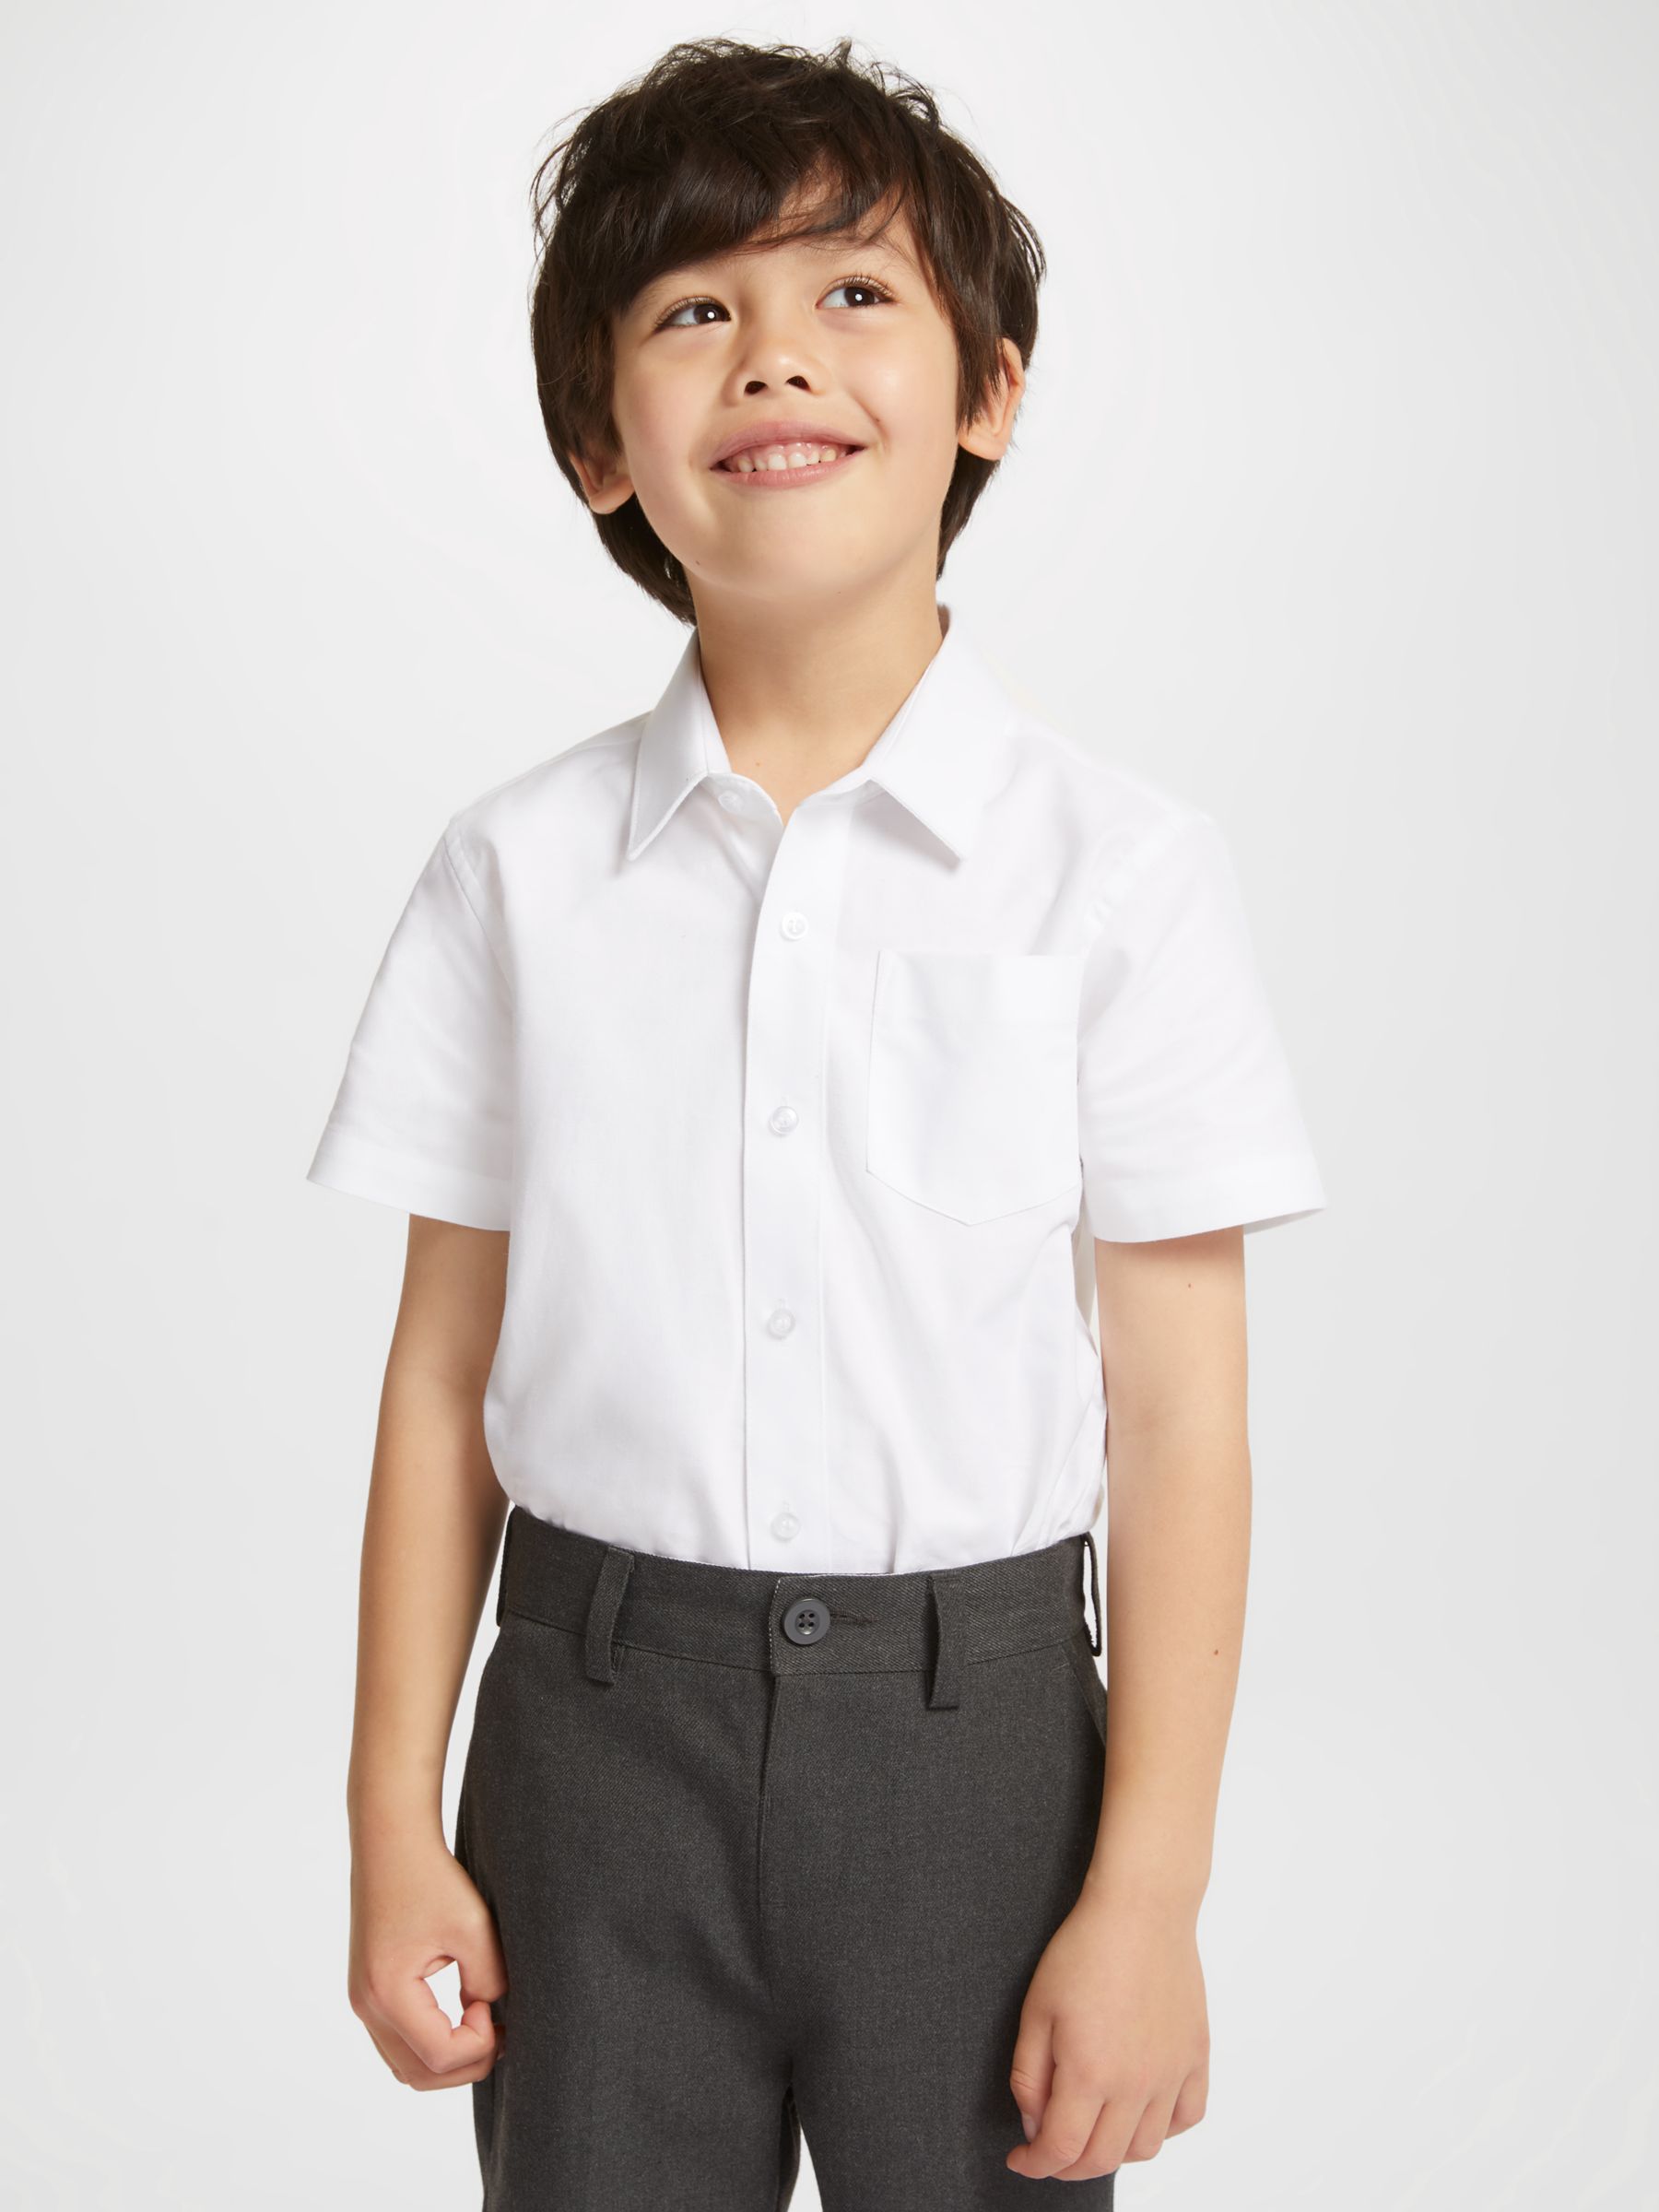 John Lewis GOTS Organic Cotton Short Sleeve School Shirt, Pack of 2, White, 3 years